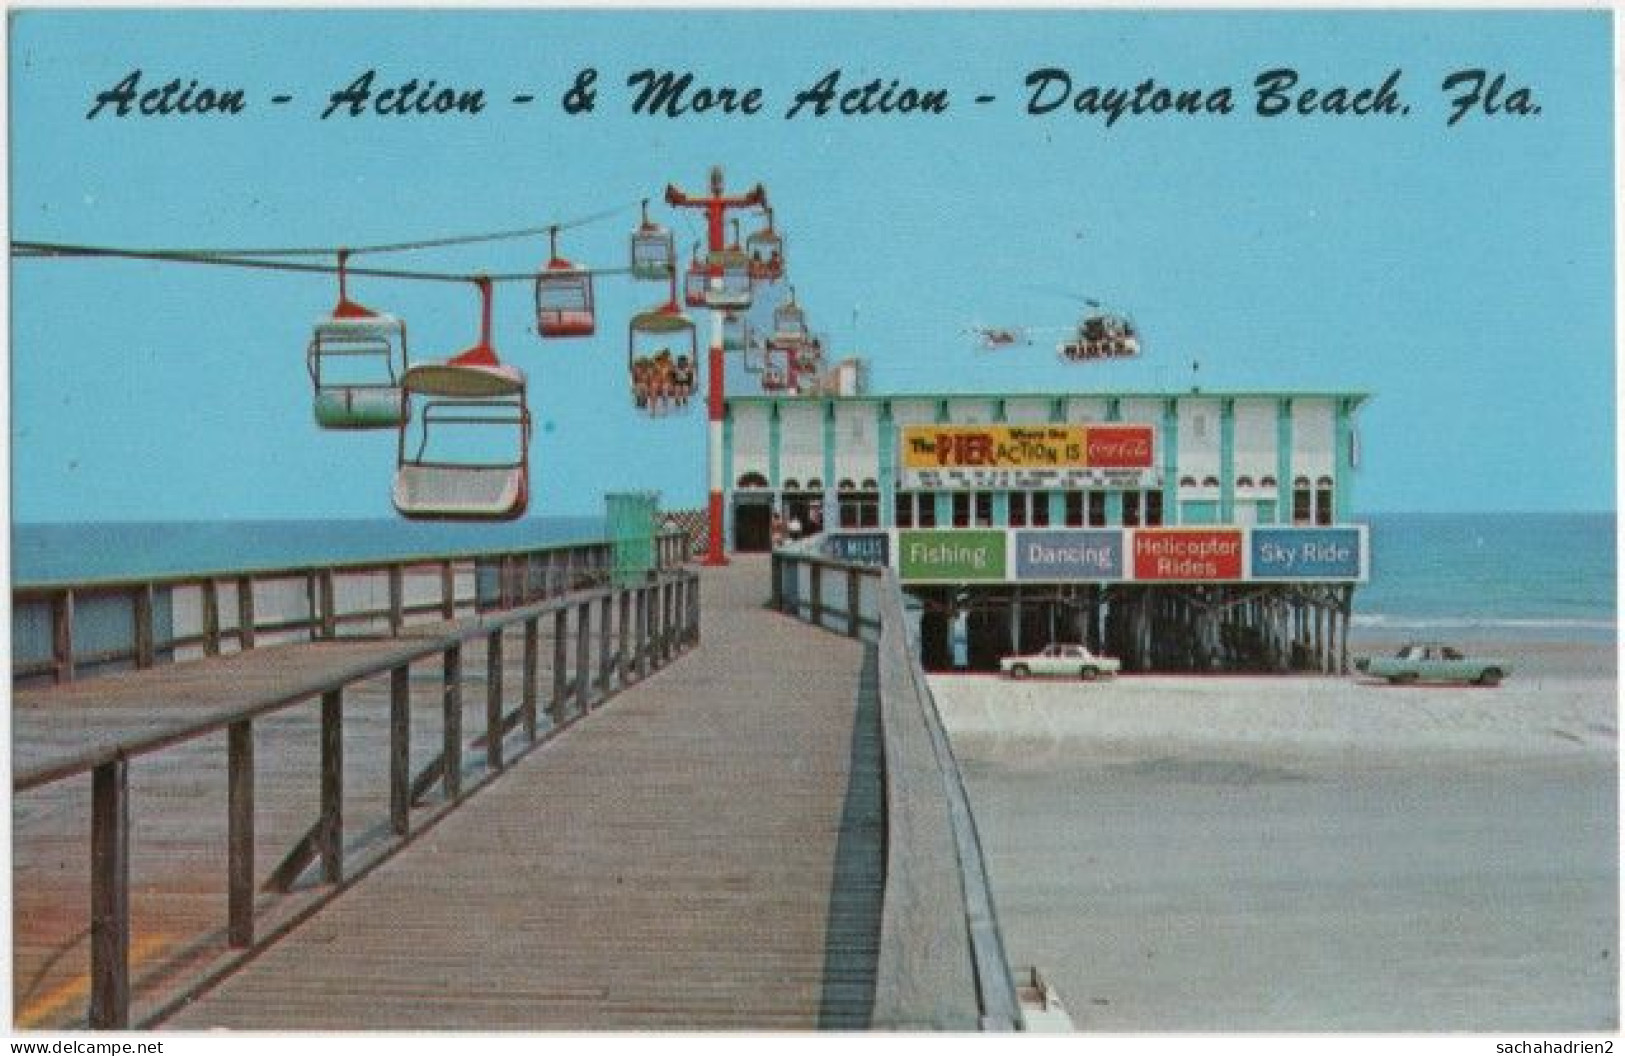 Pf. DAYTONA BEACH. Action. Action. & More Action - Daytona